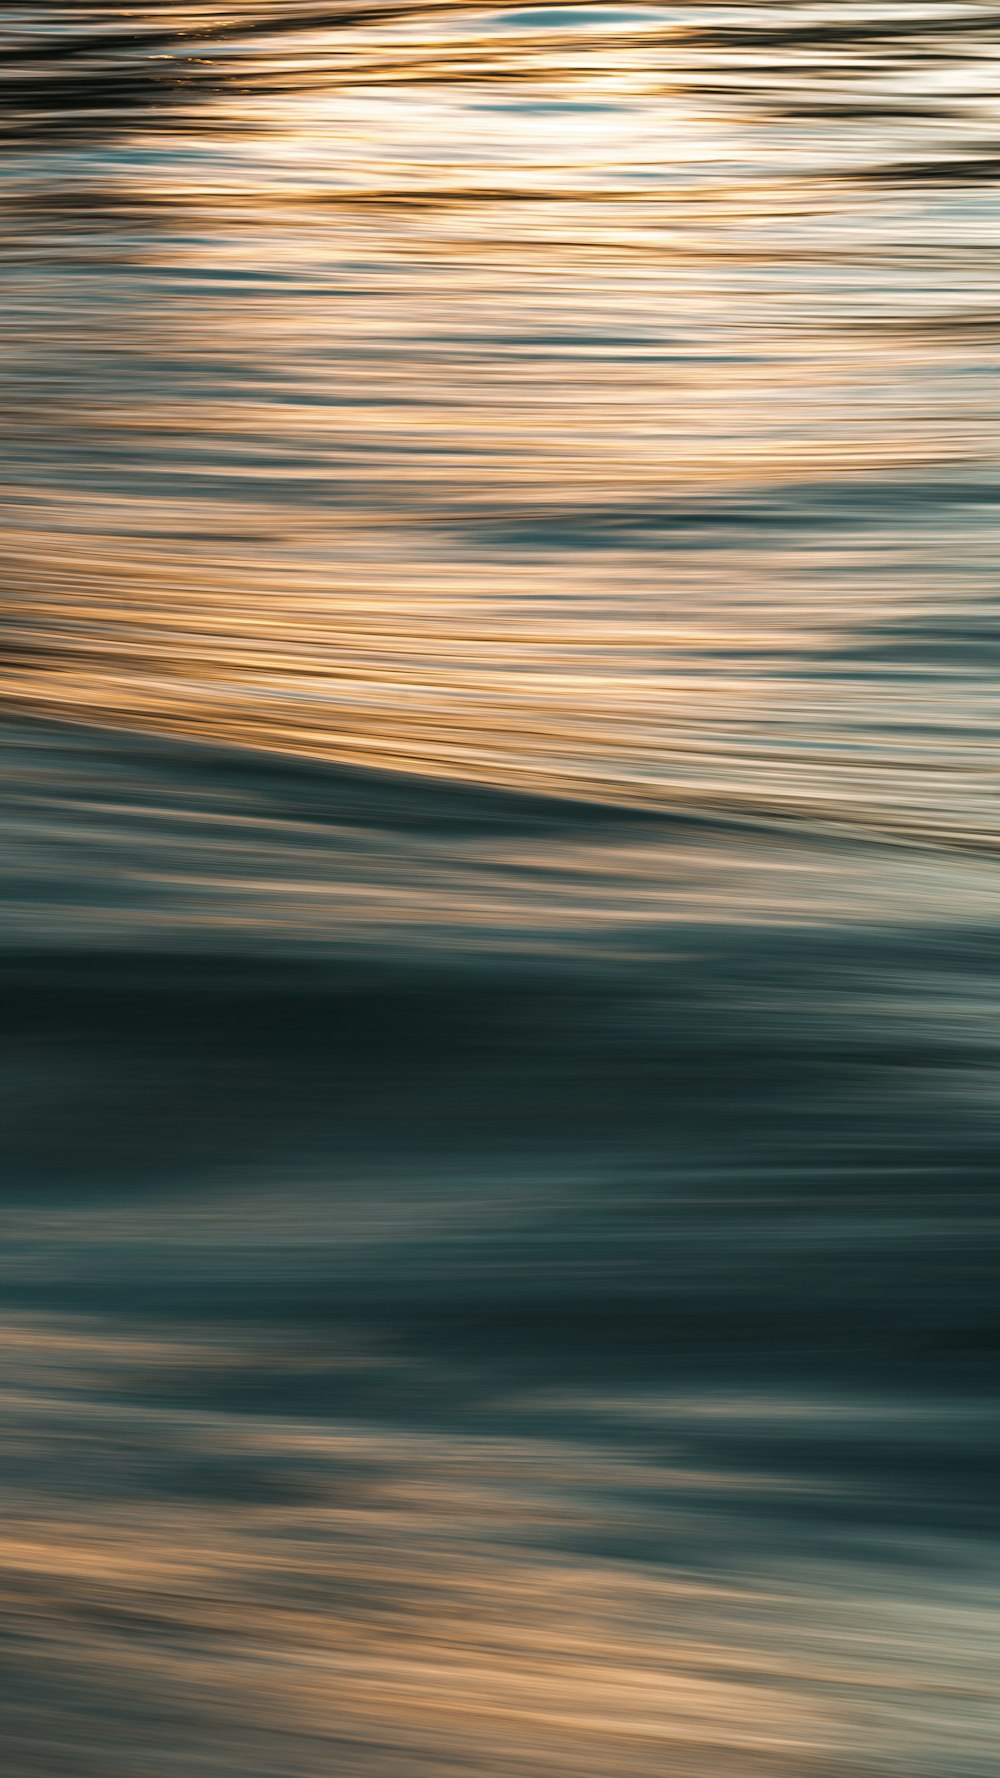 Una foto borrosa de una tabla de surf en el agua